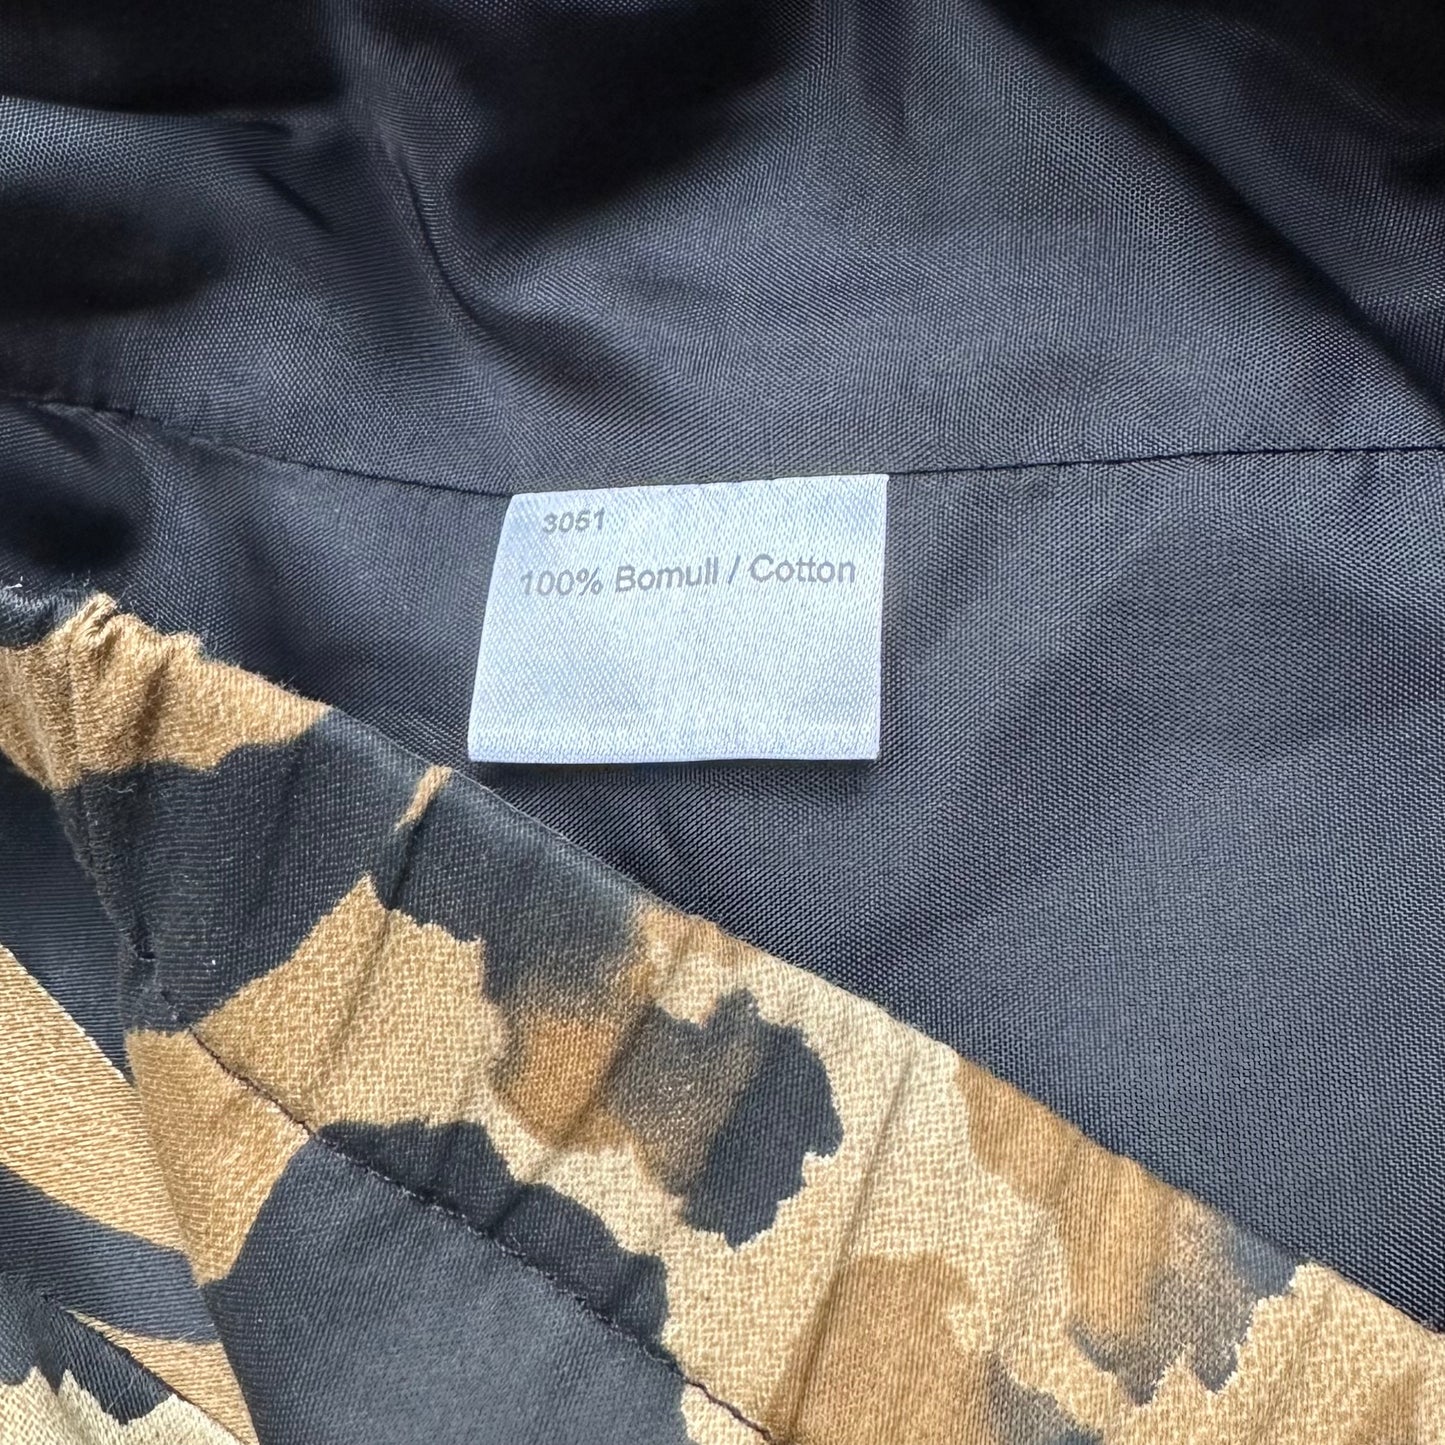 Animal Print Cotton Bomber Jacket, size M